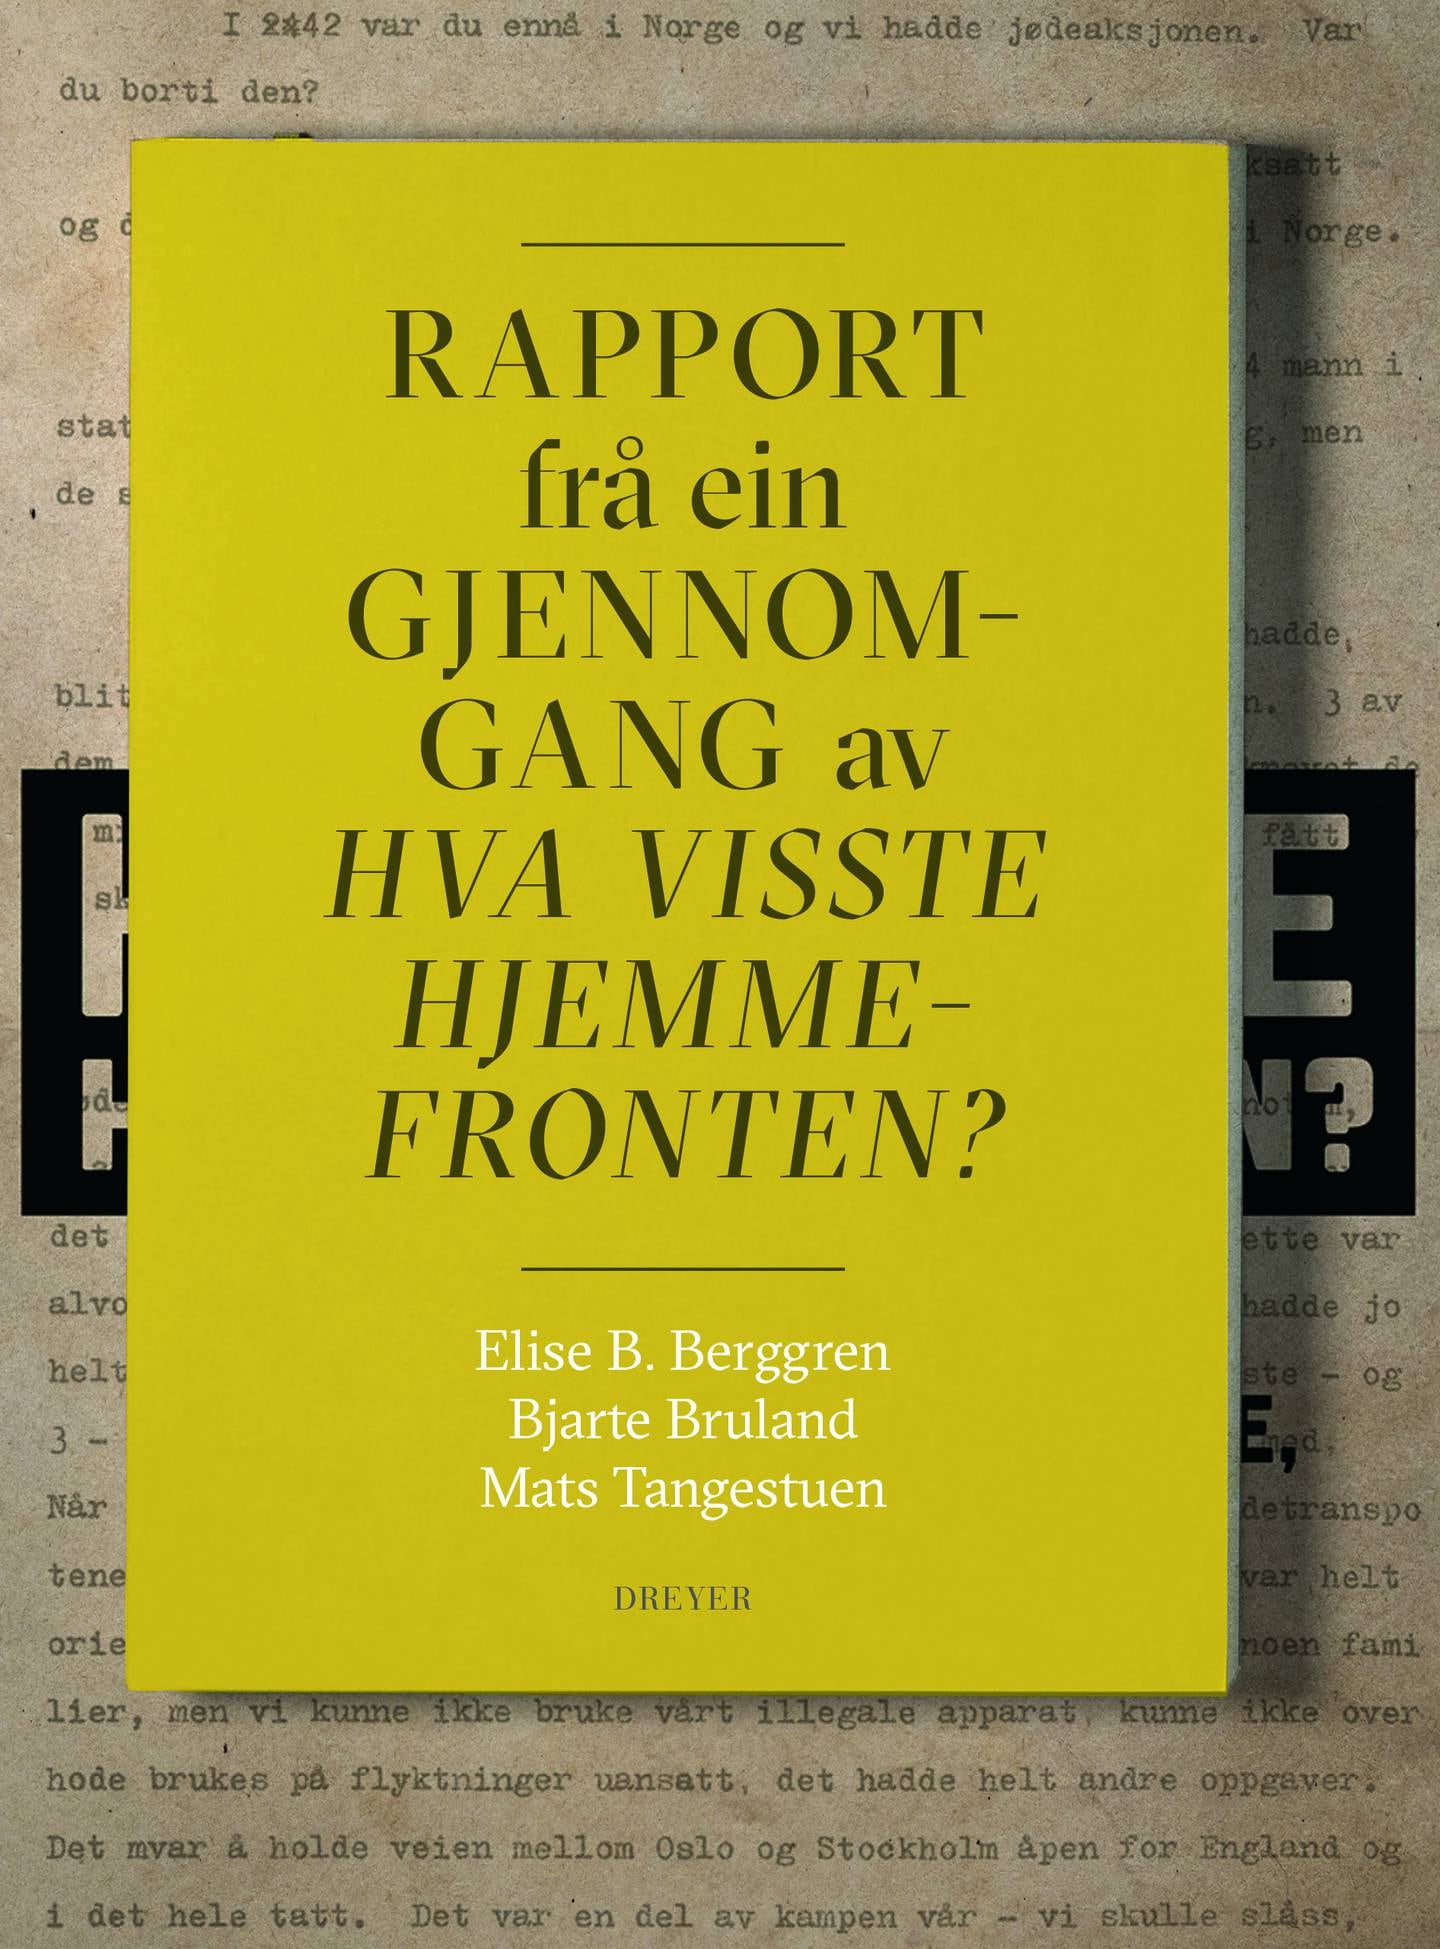 Elise B. Berggren, Bjarte Bruland, Mats Tangestuen